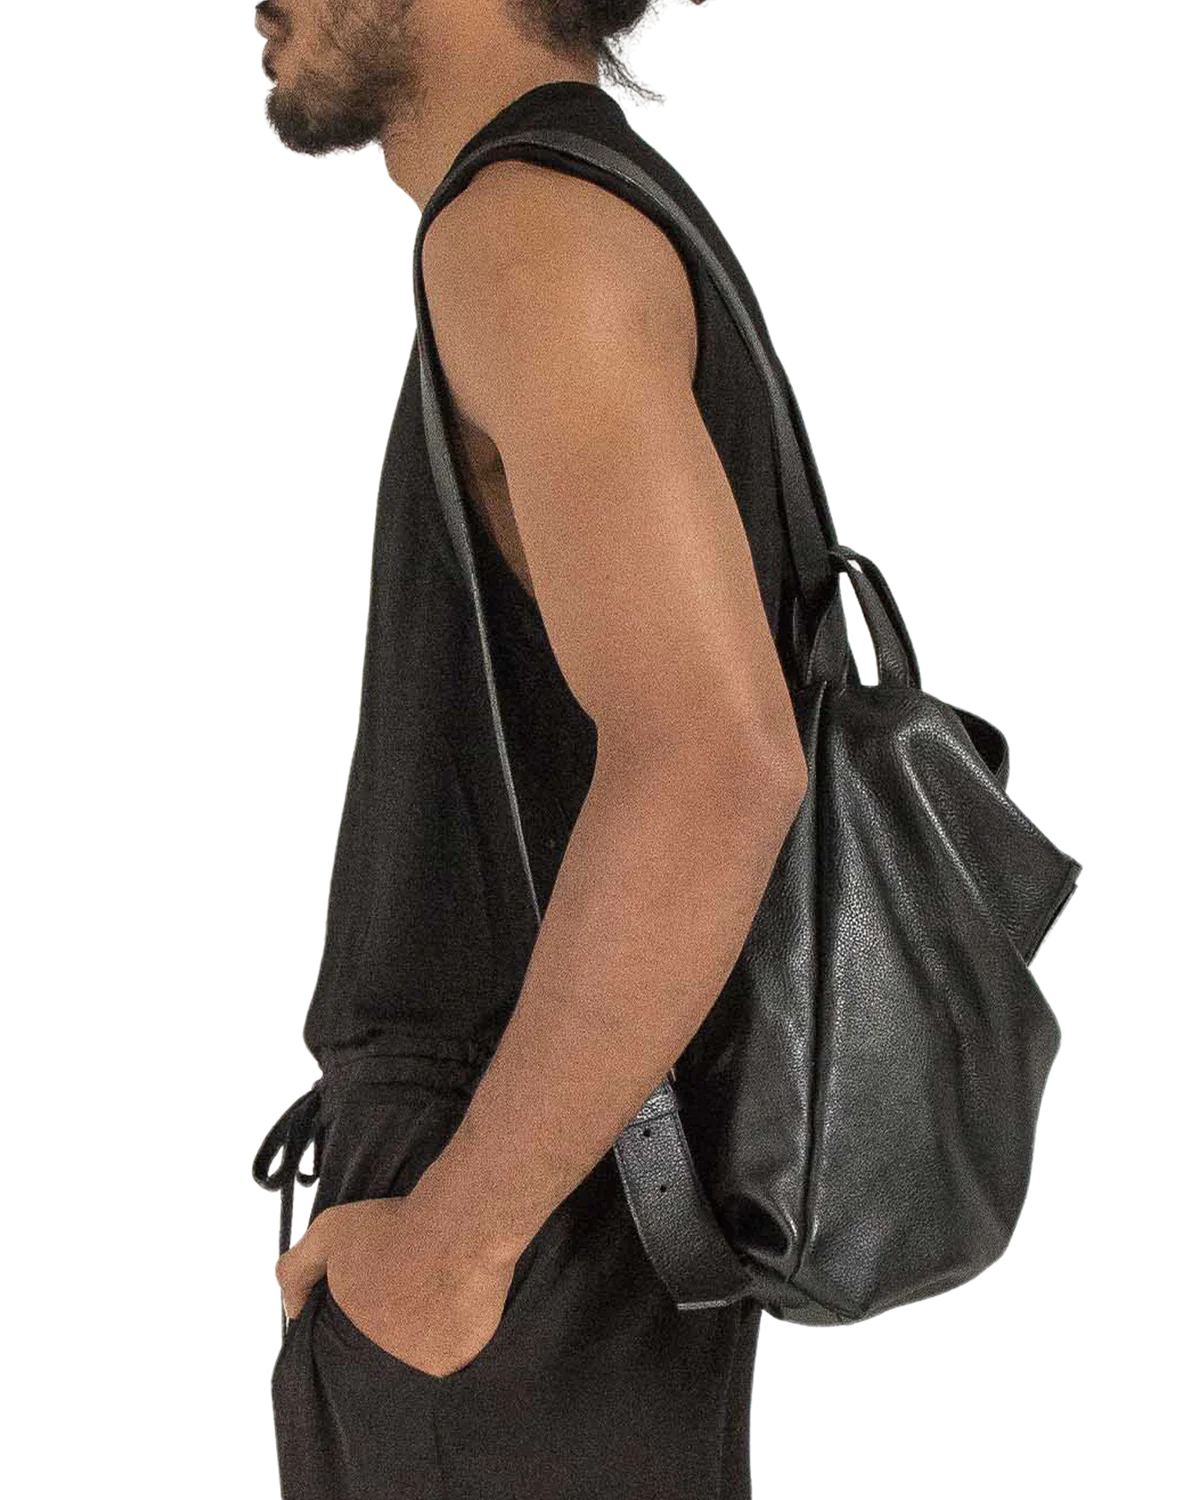 Wolfin back-pack bag